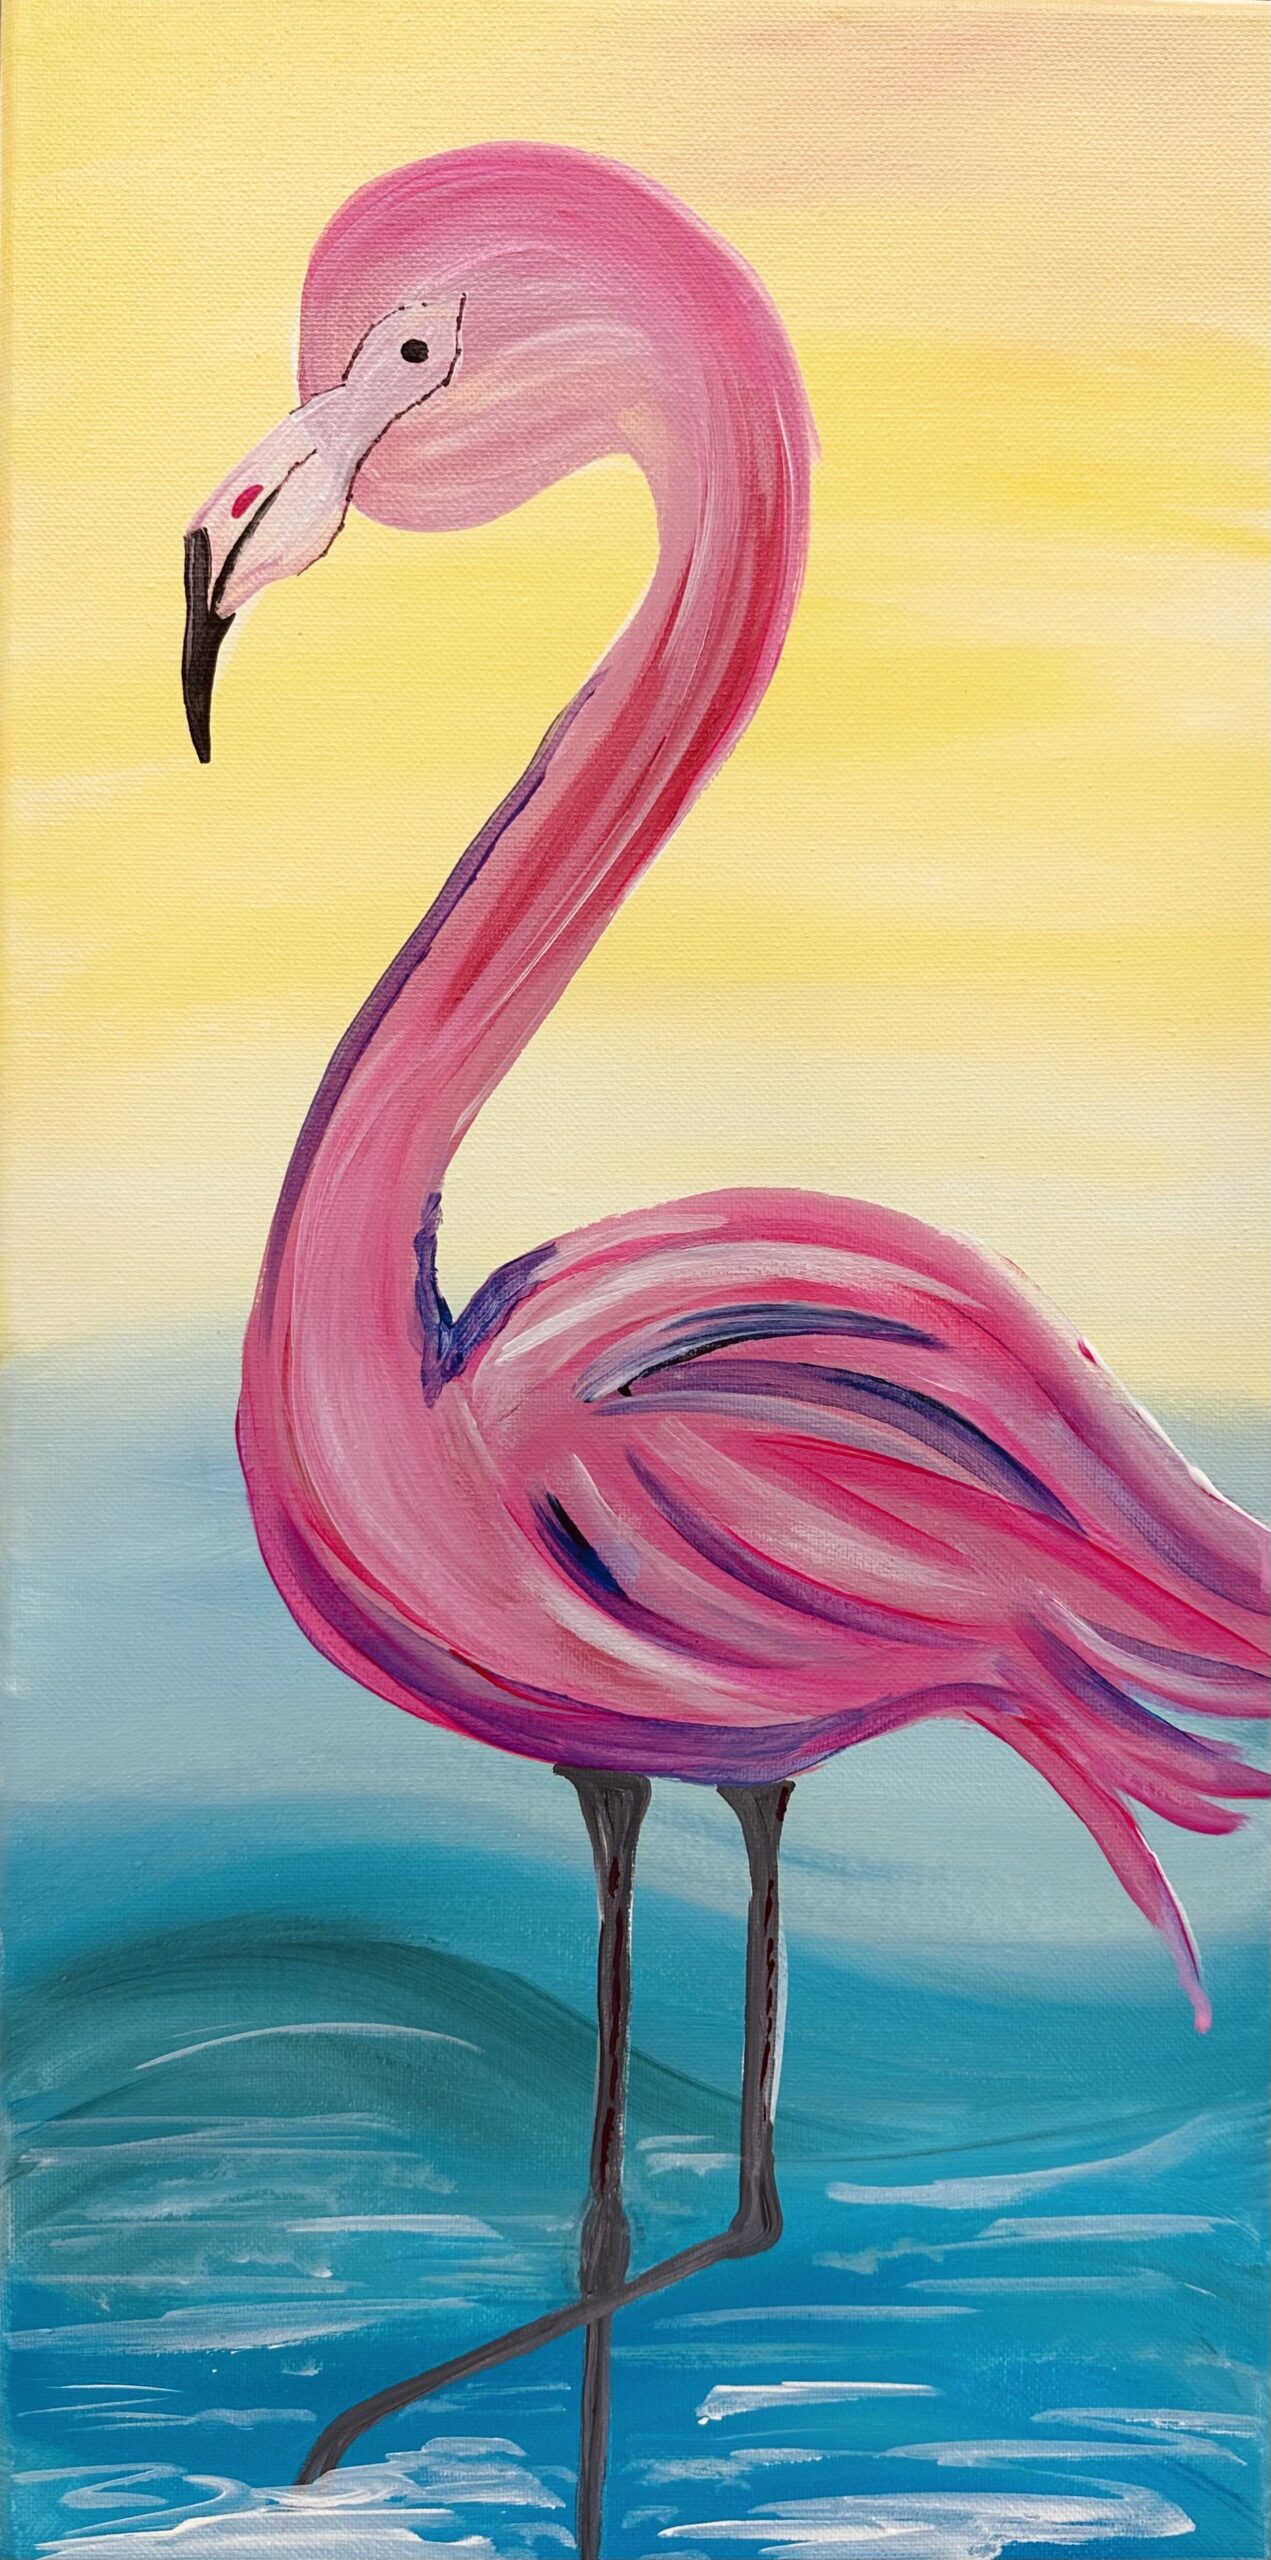 Flamingo Flair